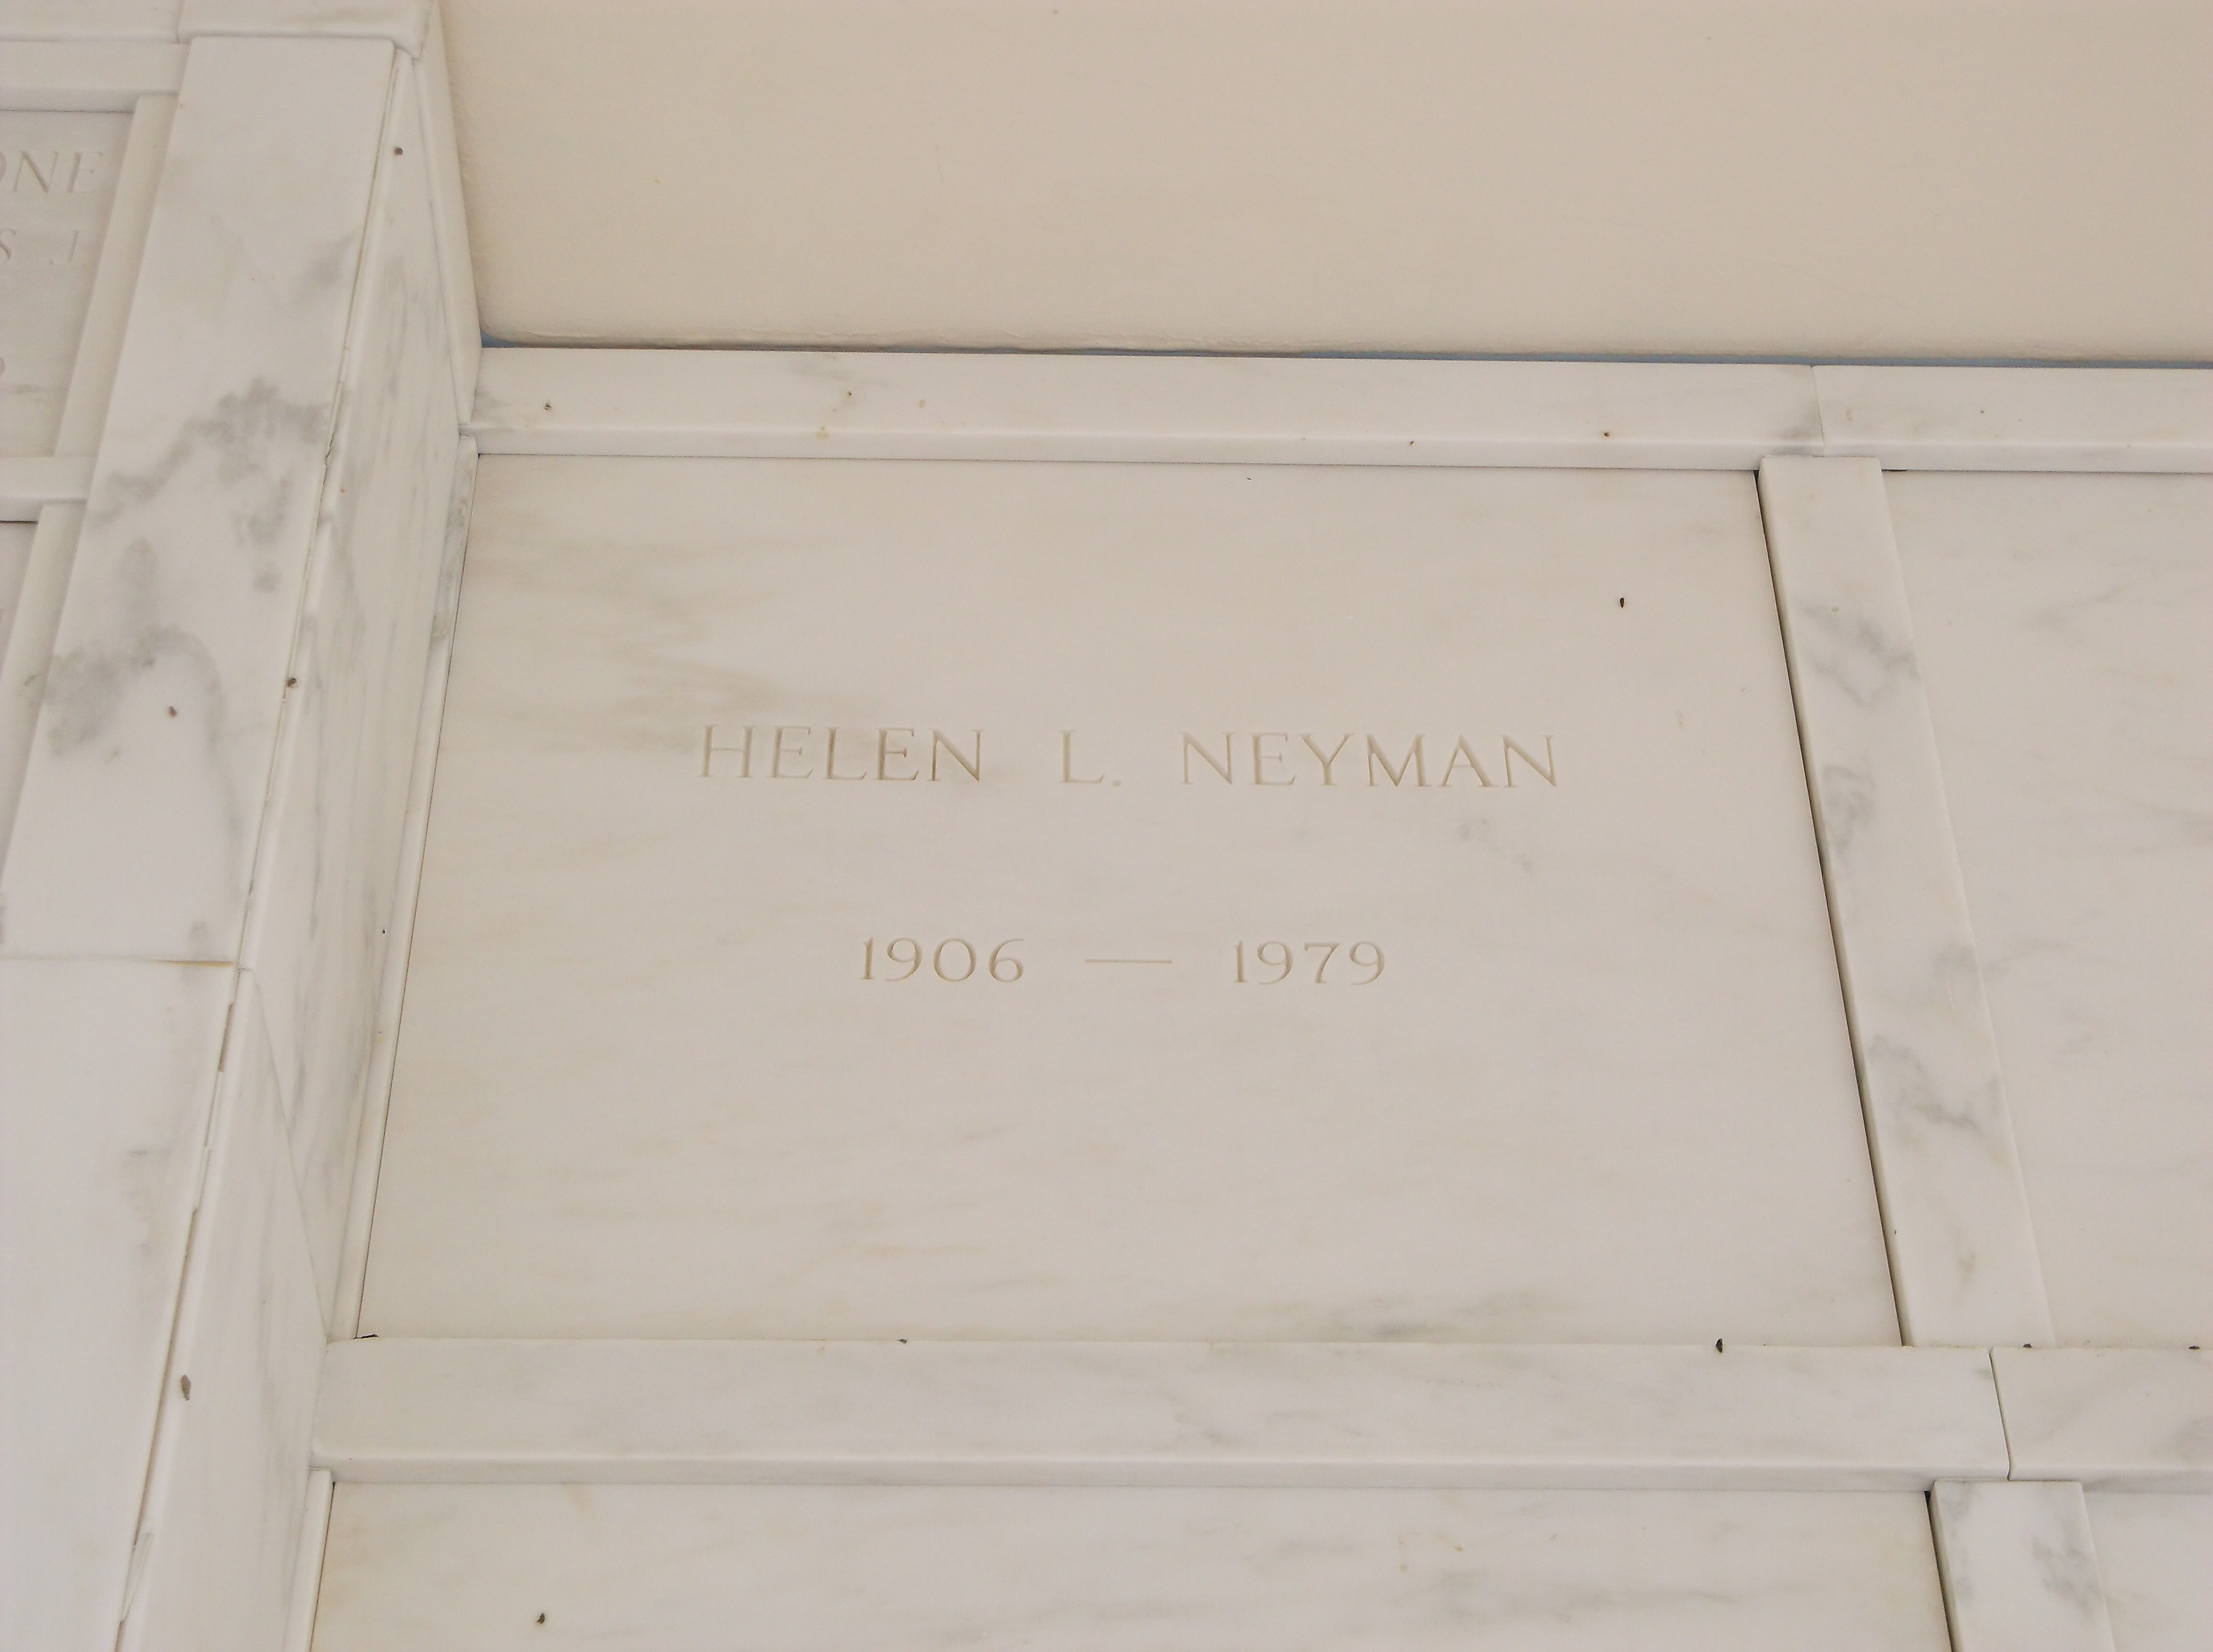 Helen L Neyman